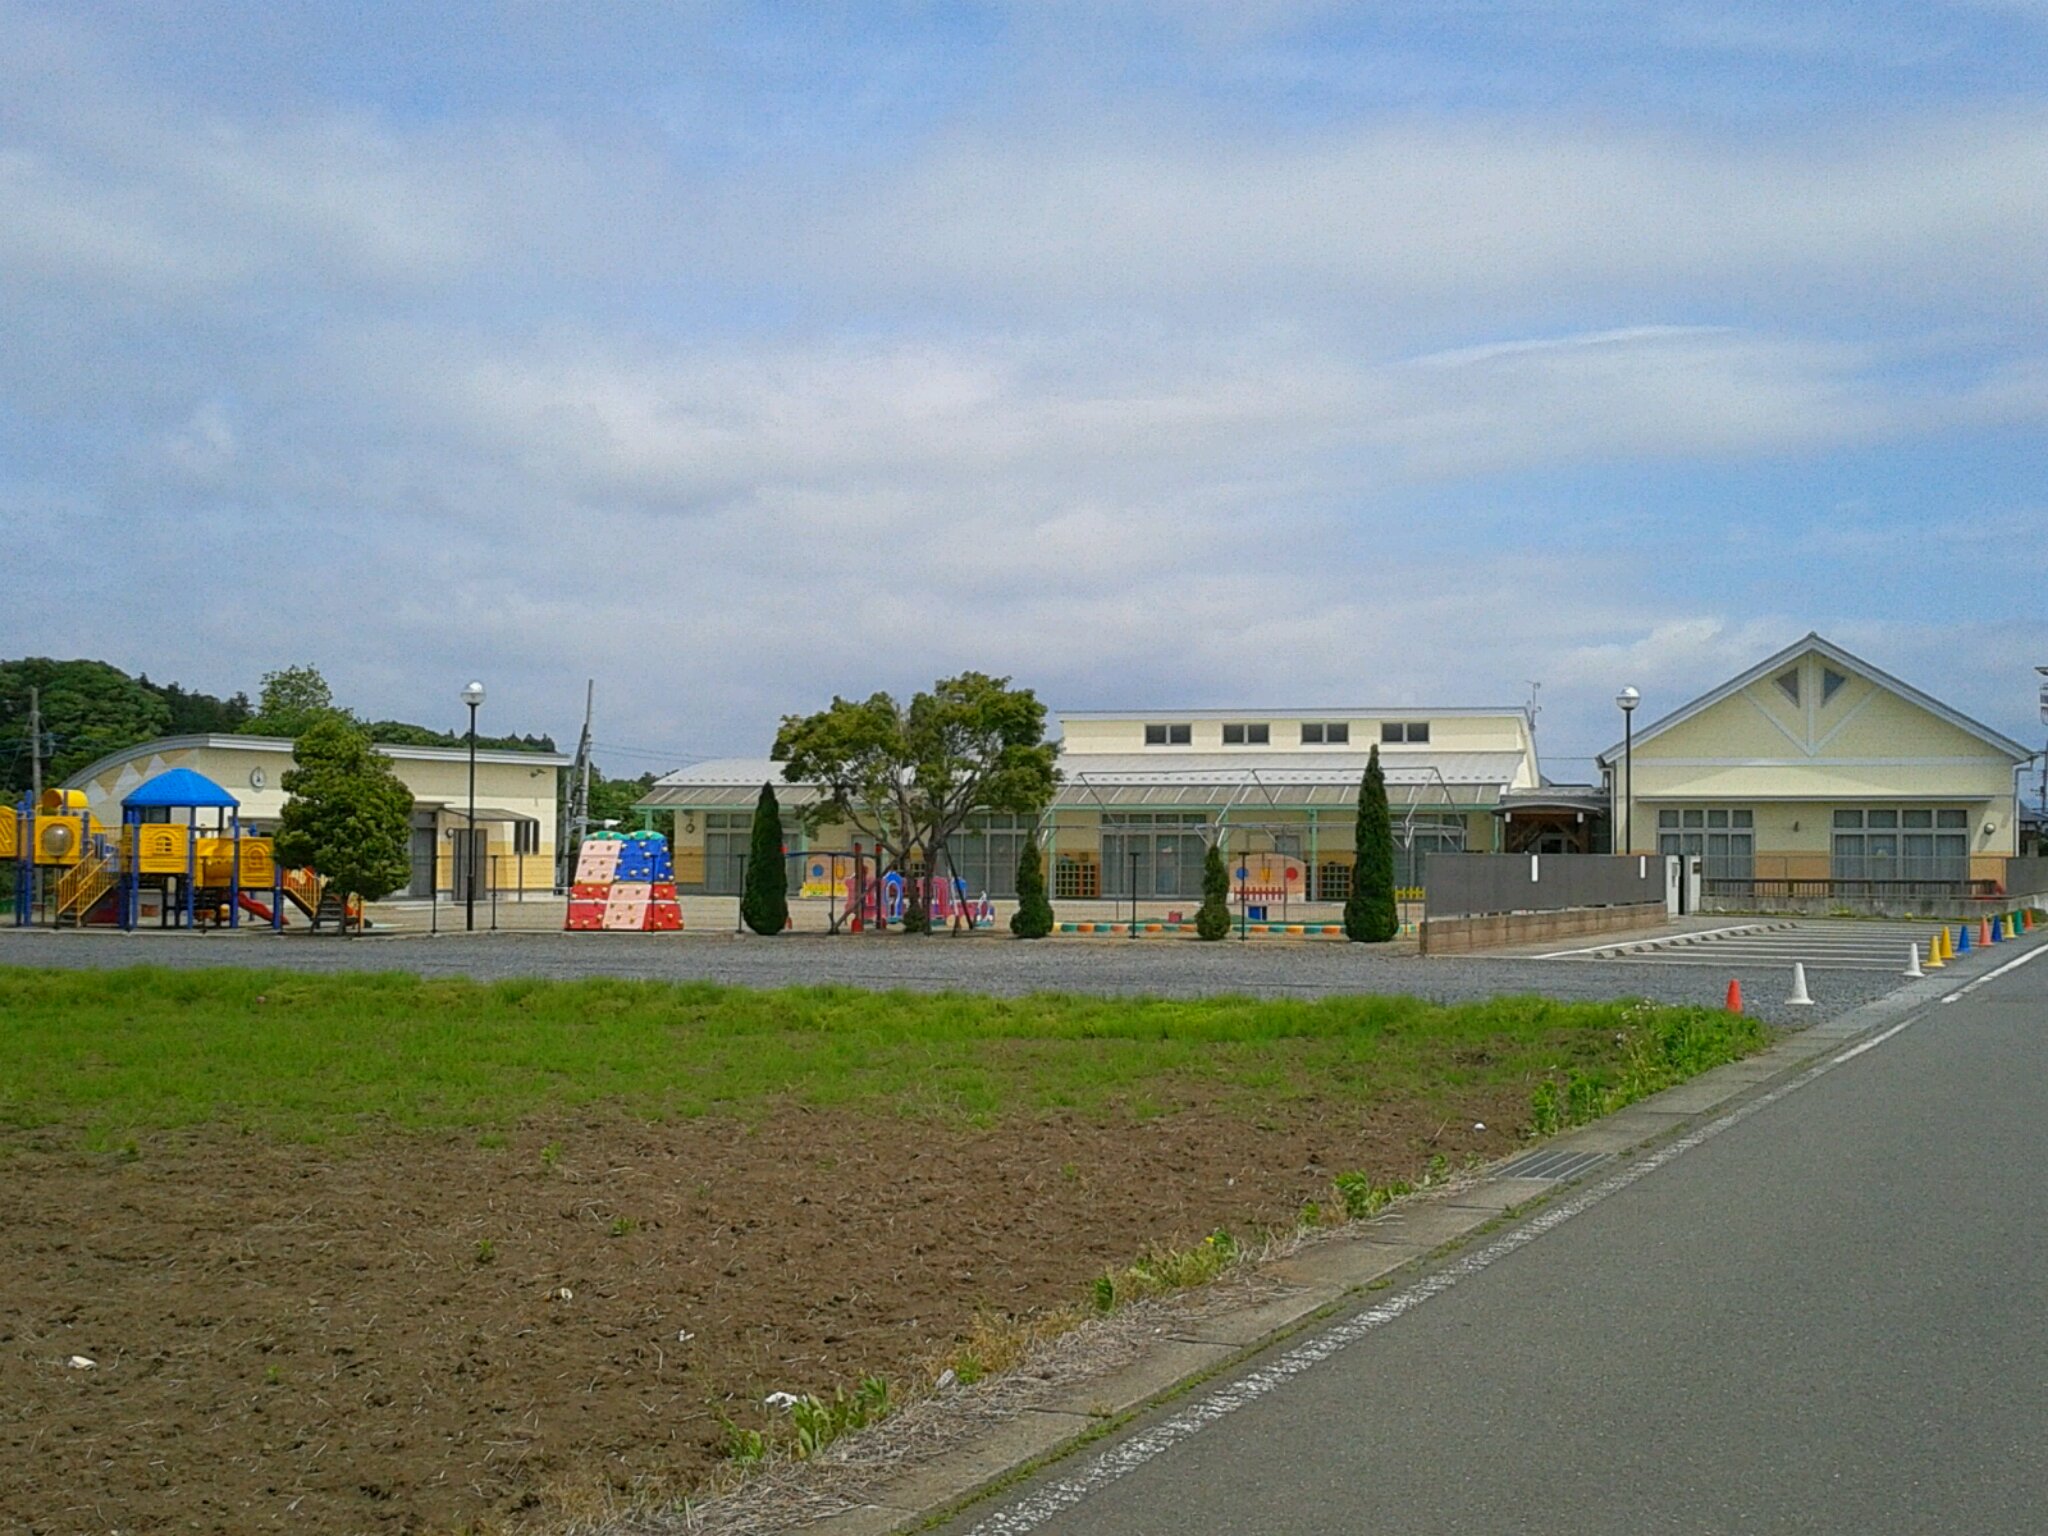 kindergarten ・ Nursery. Sunflower nursery school (kindergarten ・ 324m to the nursery)